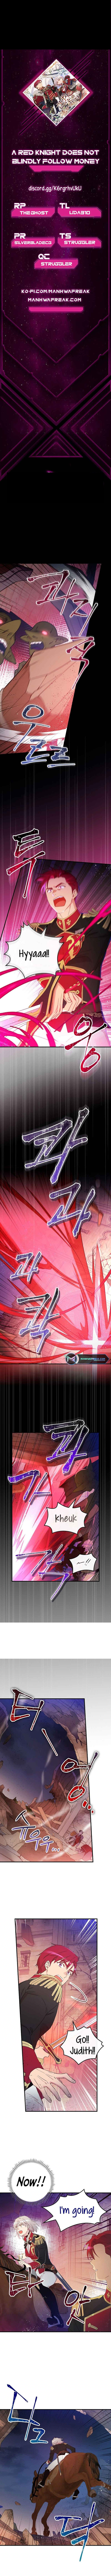 11 Manga Like The Red Knight Seeks No Reward